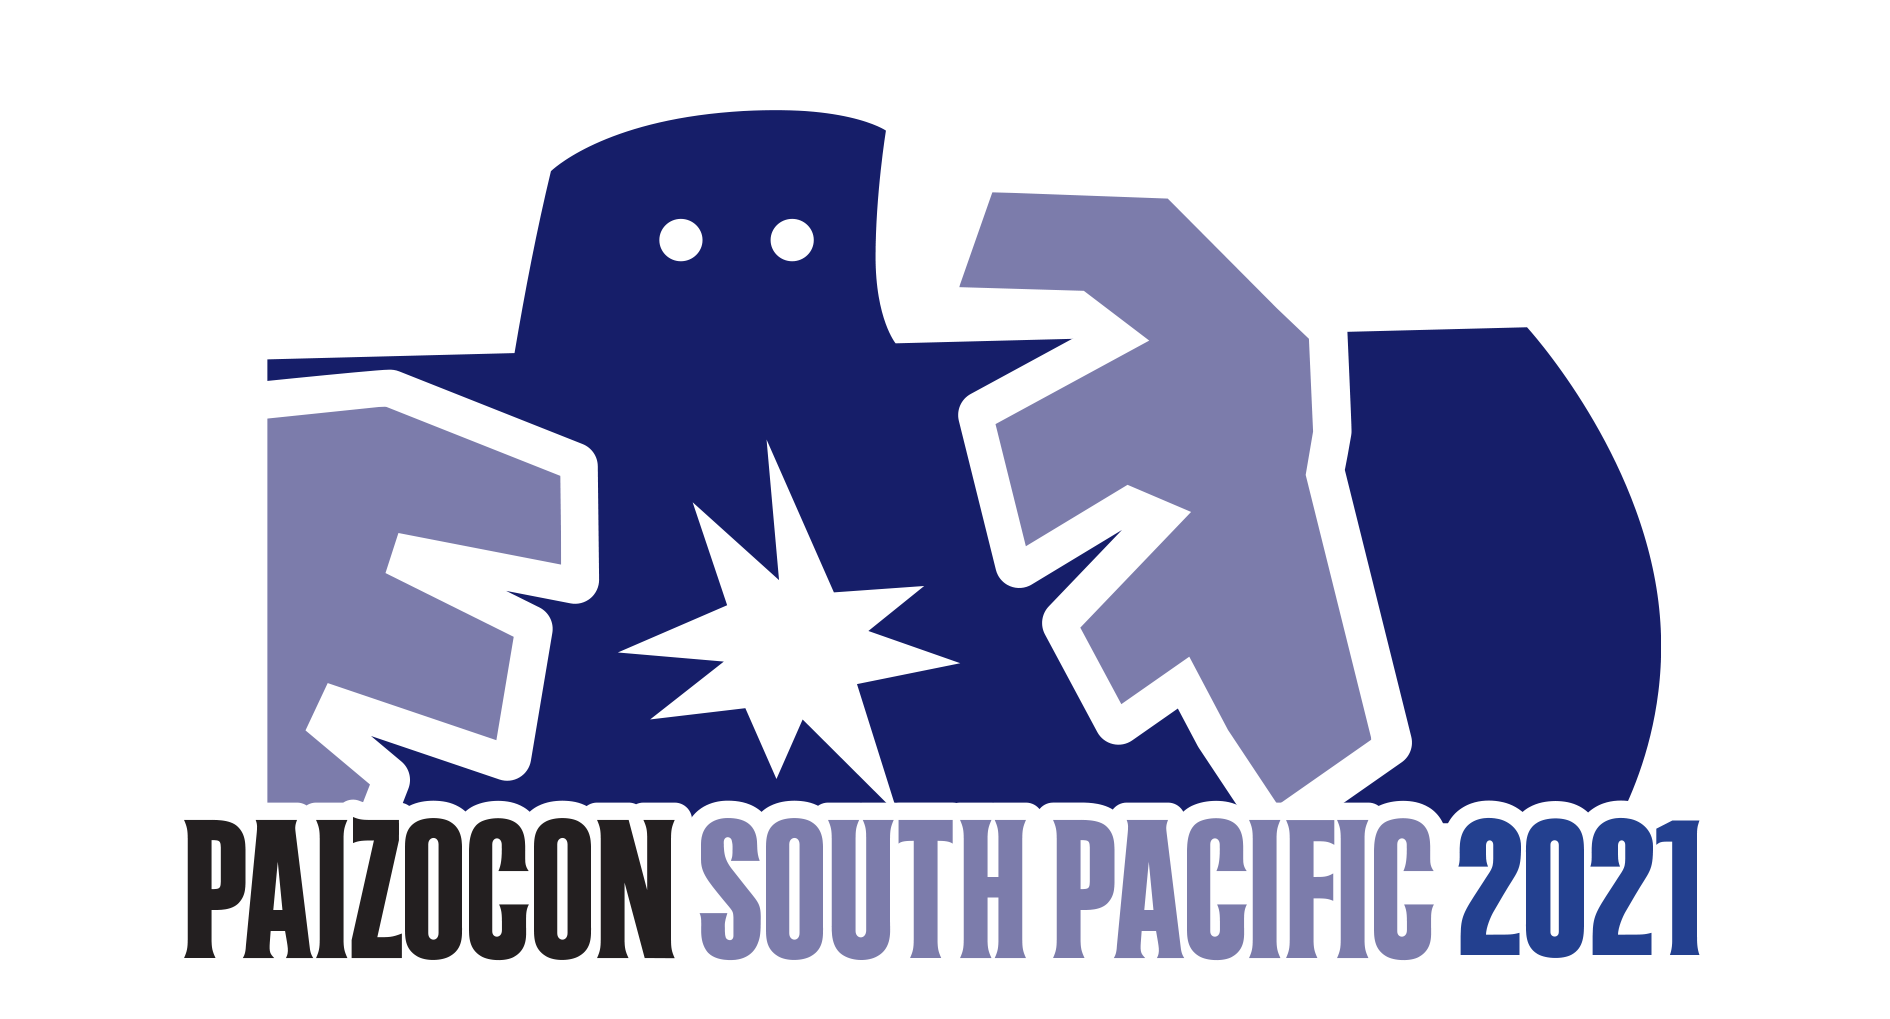 PaizoCon South Pacific 2021